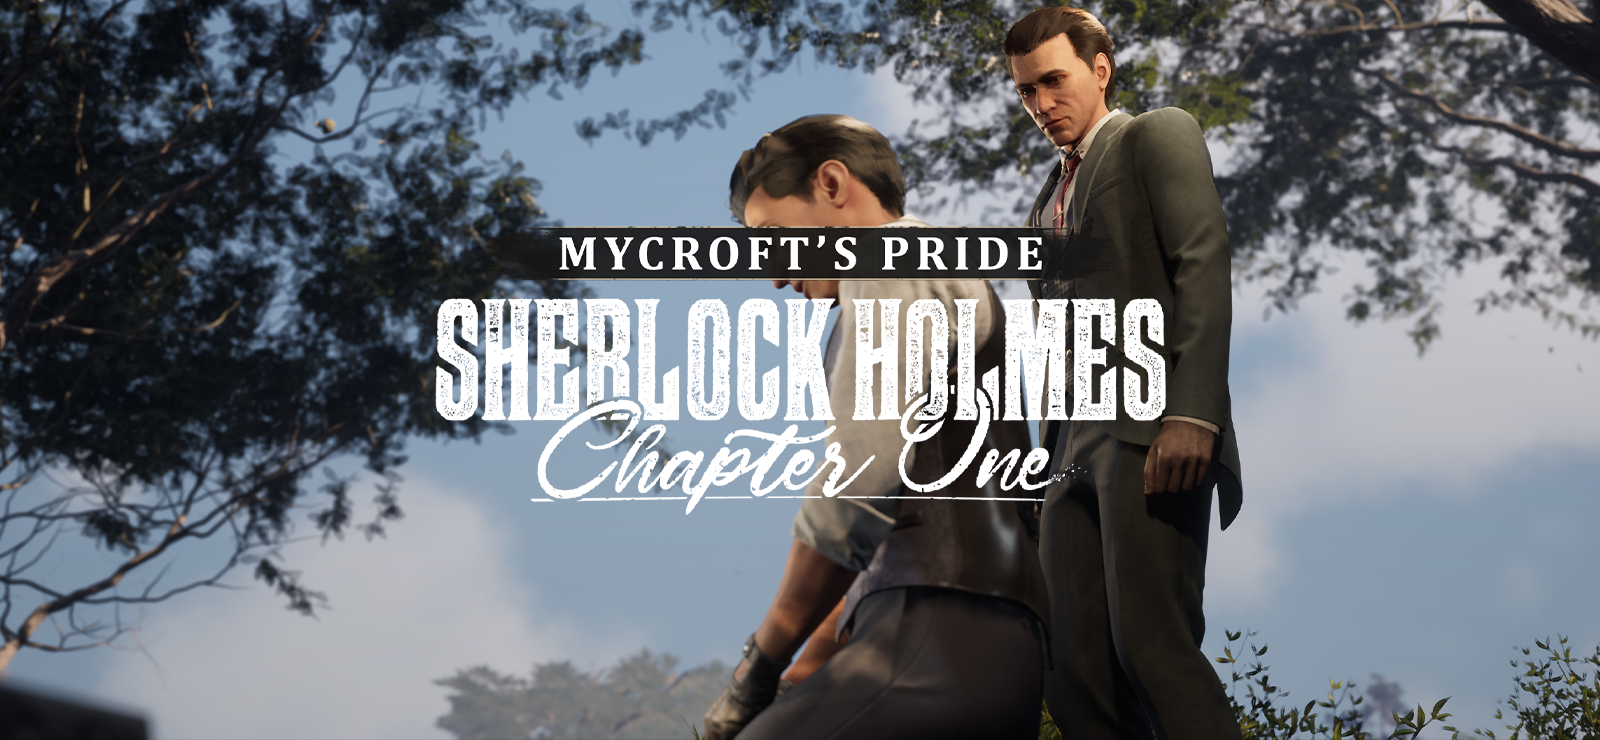 Sherlock Holmes Chapter One - Mycroft’s Pride